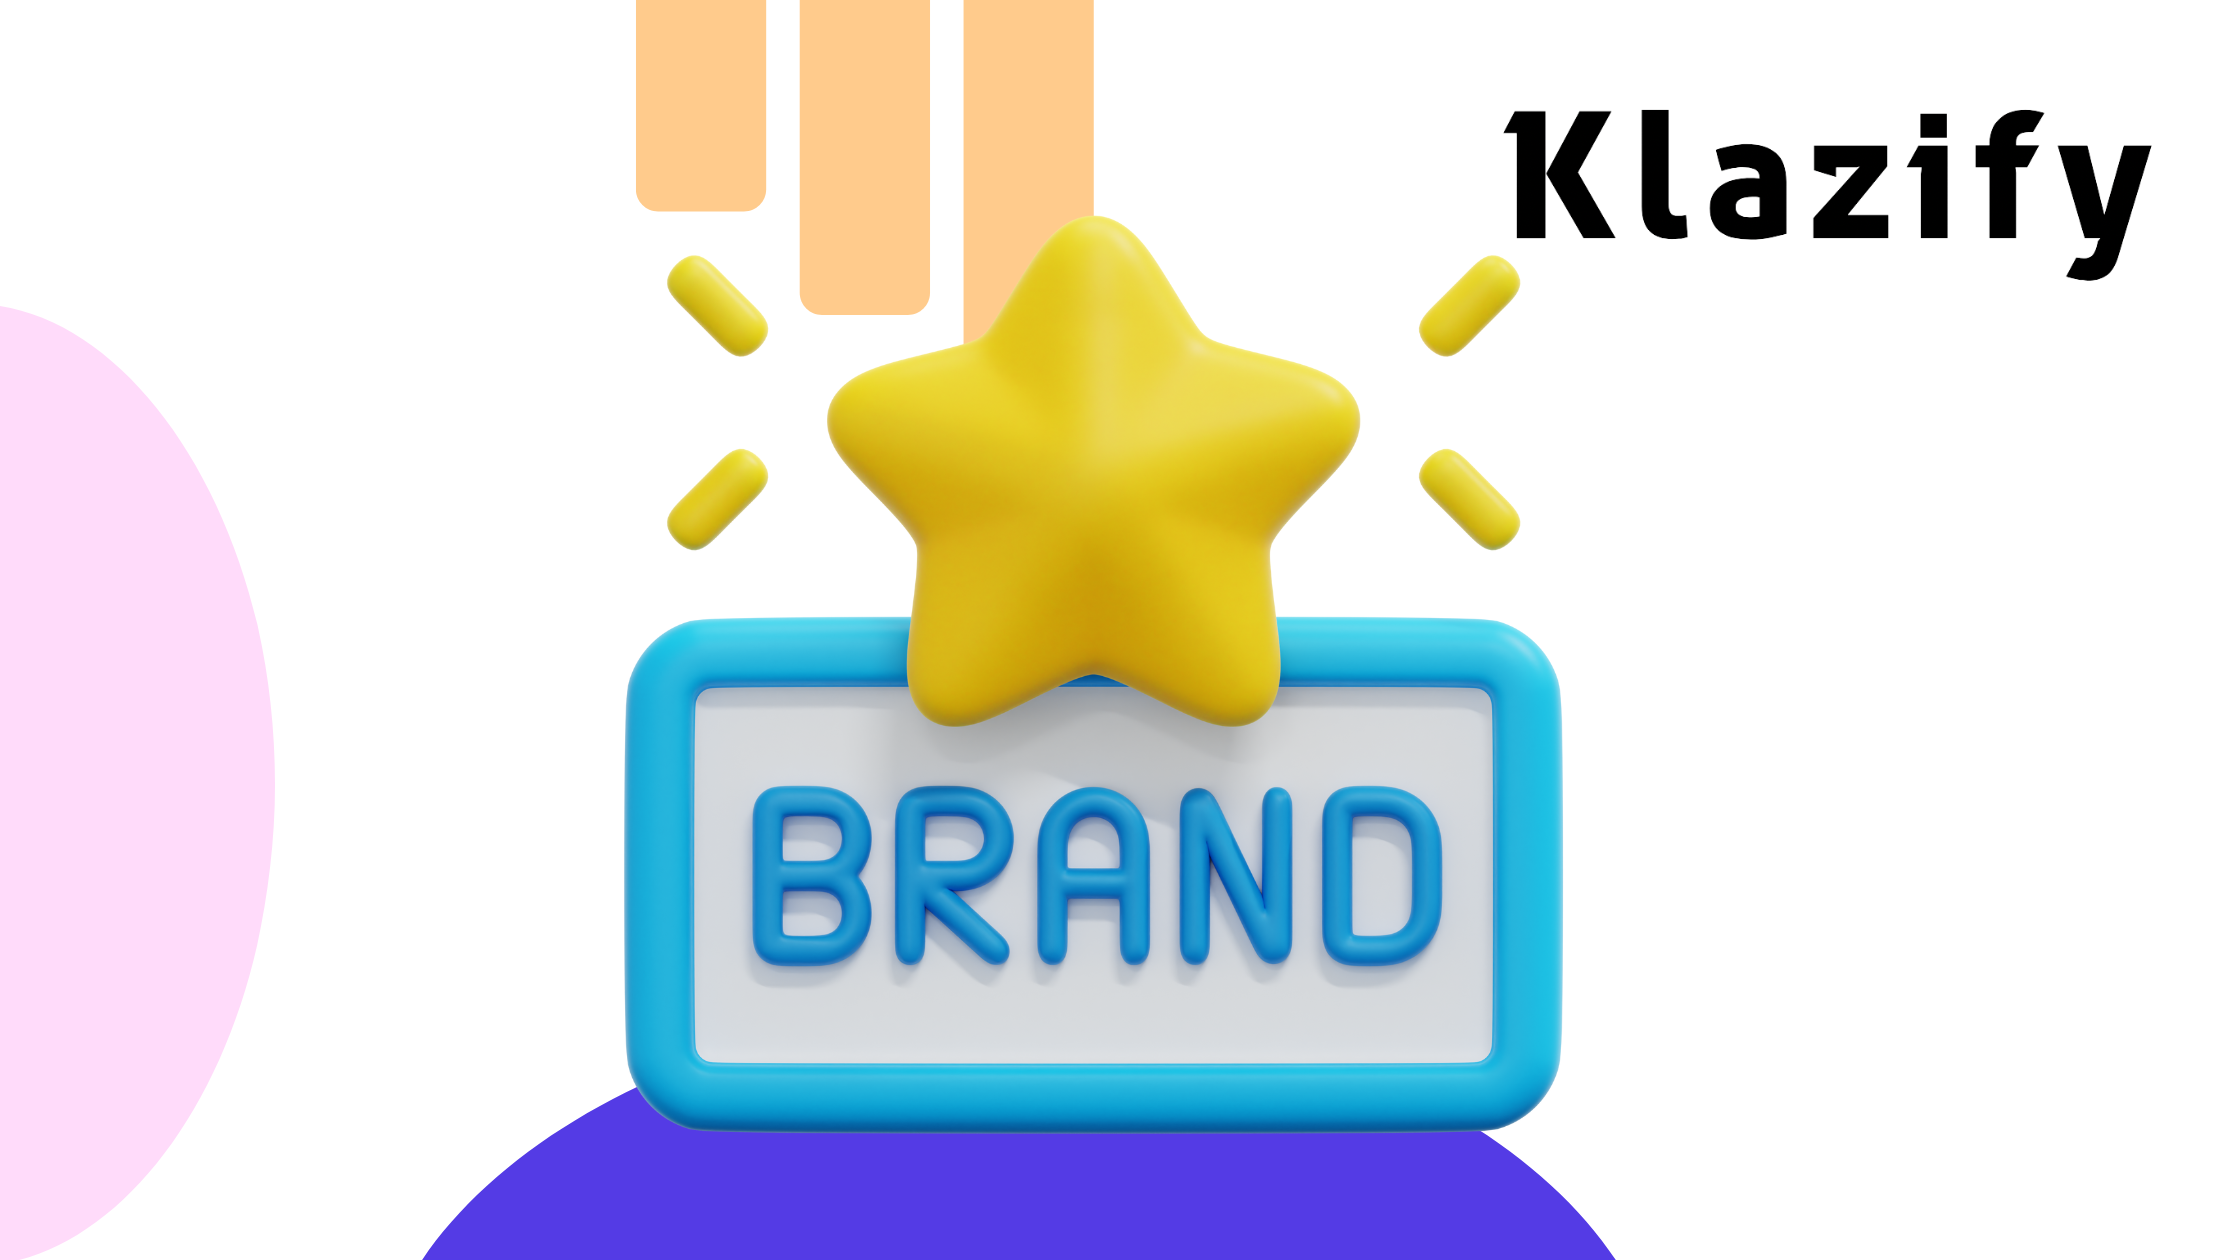 Brand Logos API: Access A Wealth Of Brand Logos